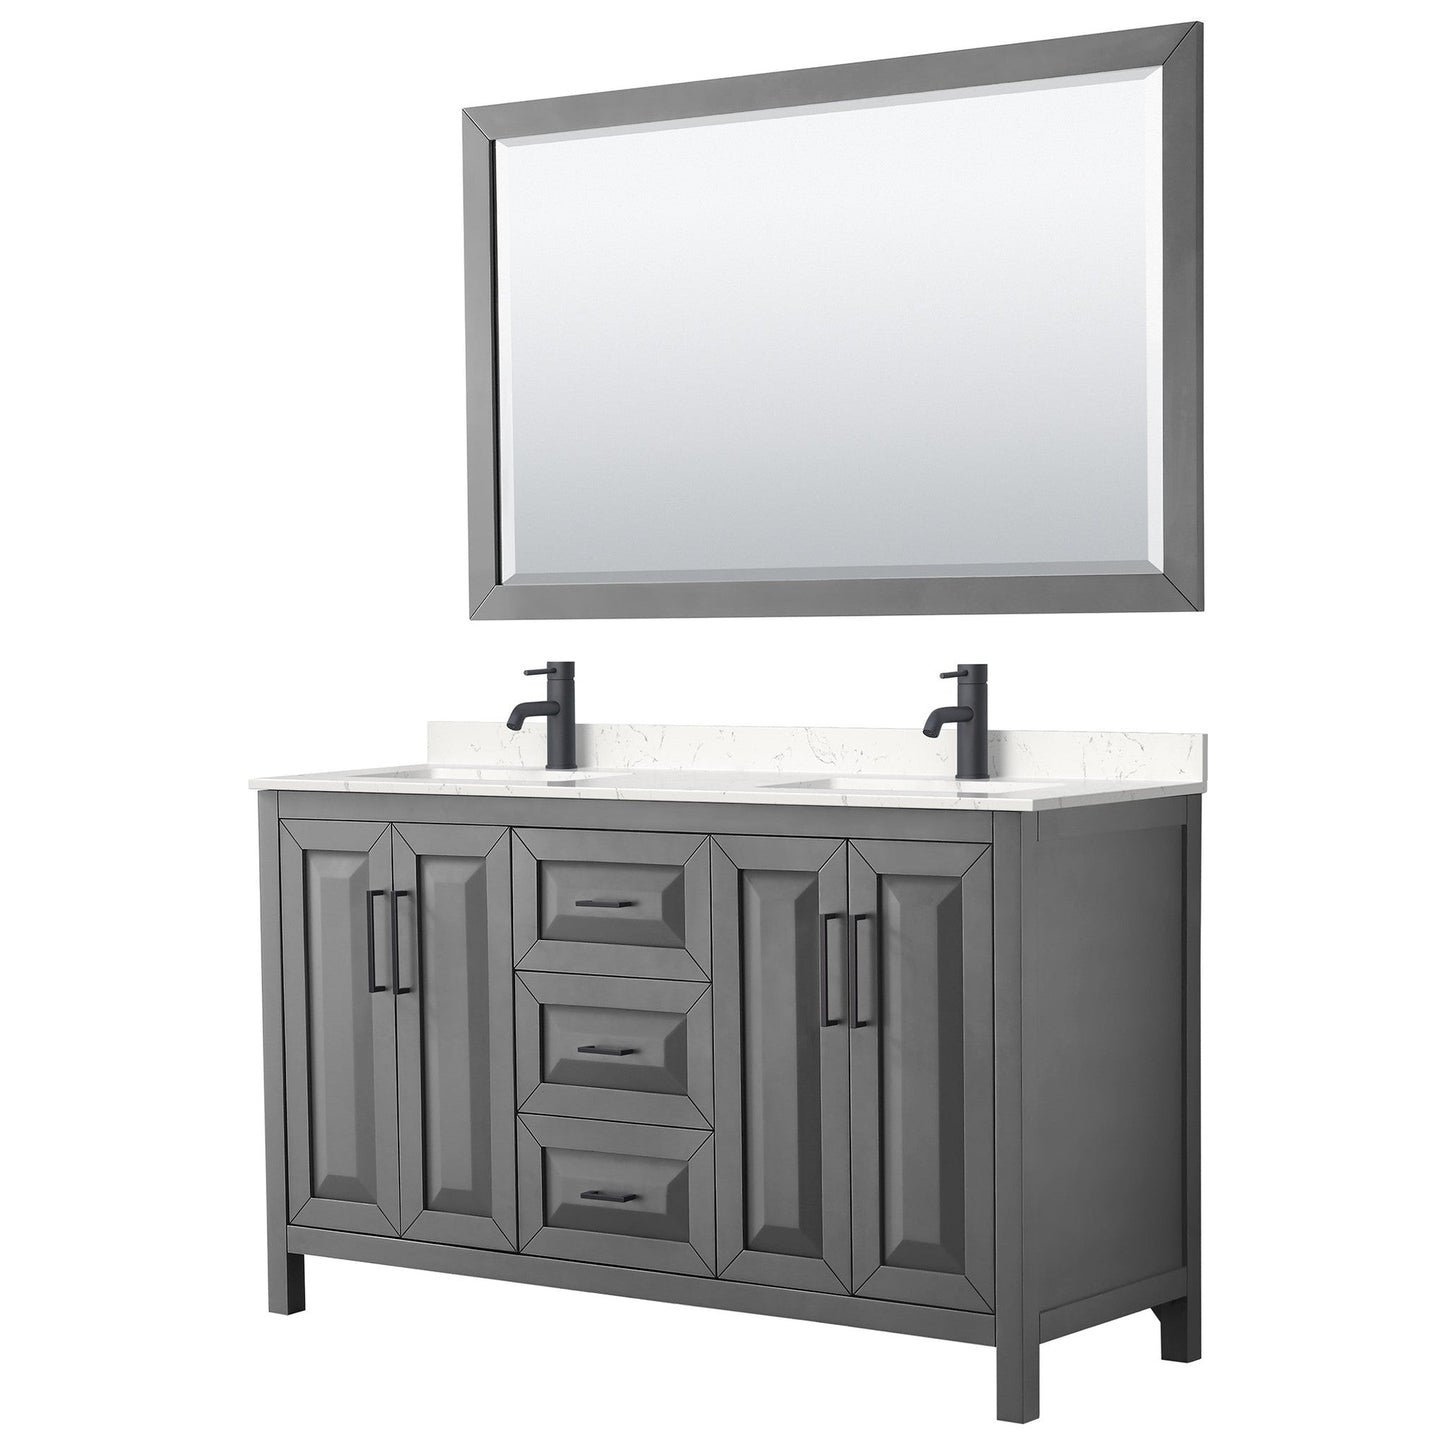 Daria 60" Double Bathroom Vanity in Dark Gray, Carrara Cultured Marble Countertop, Undermount Square Sinks, Matte Black Trim, 58" Mirror